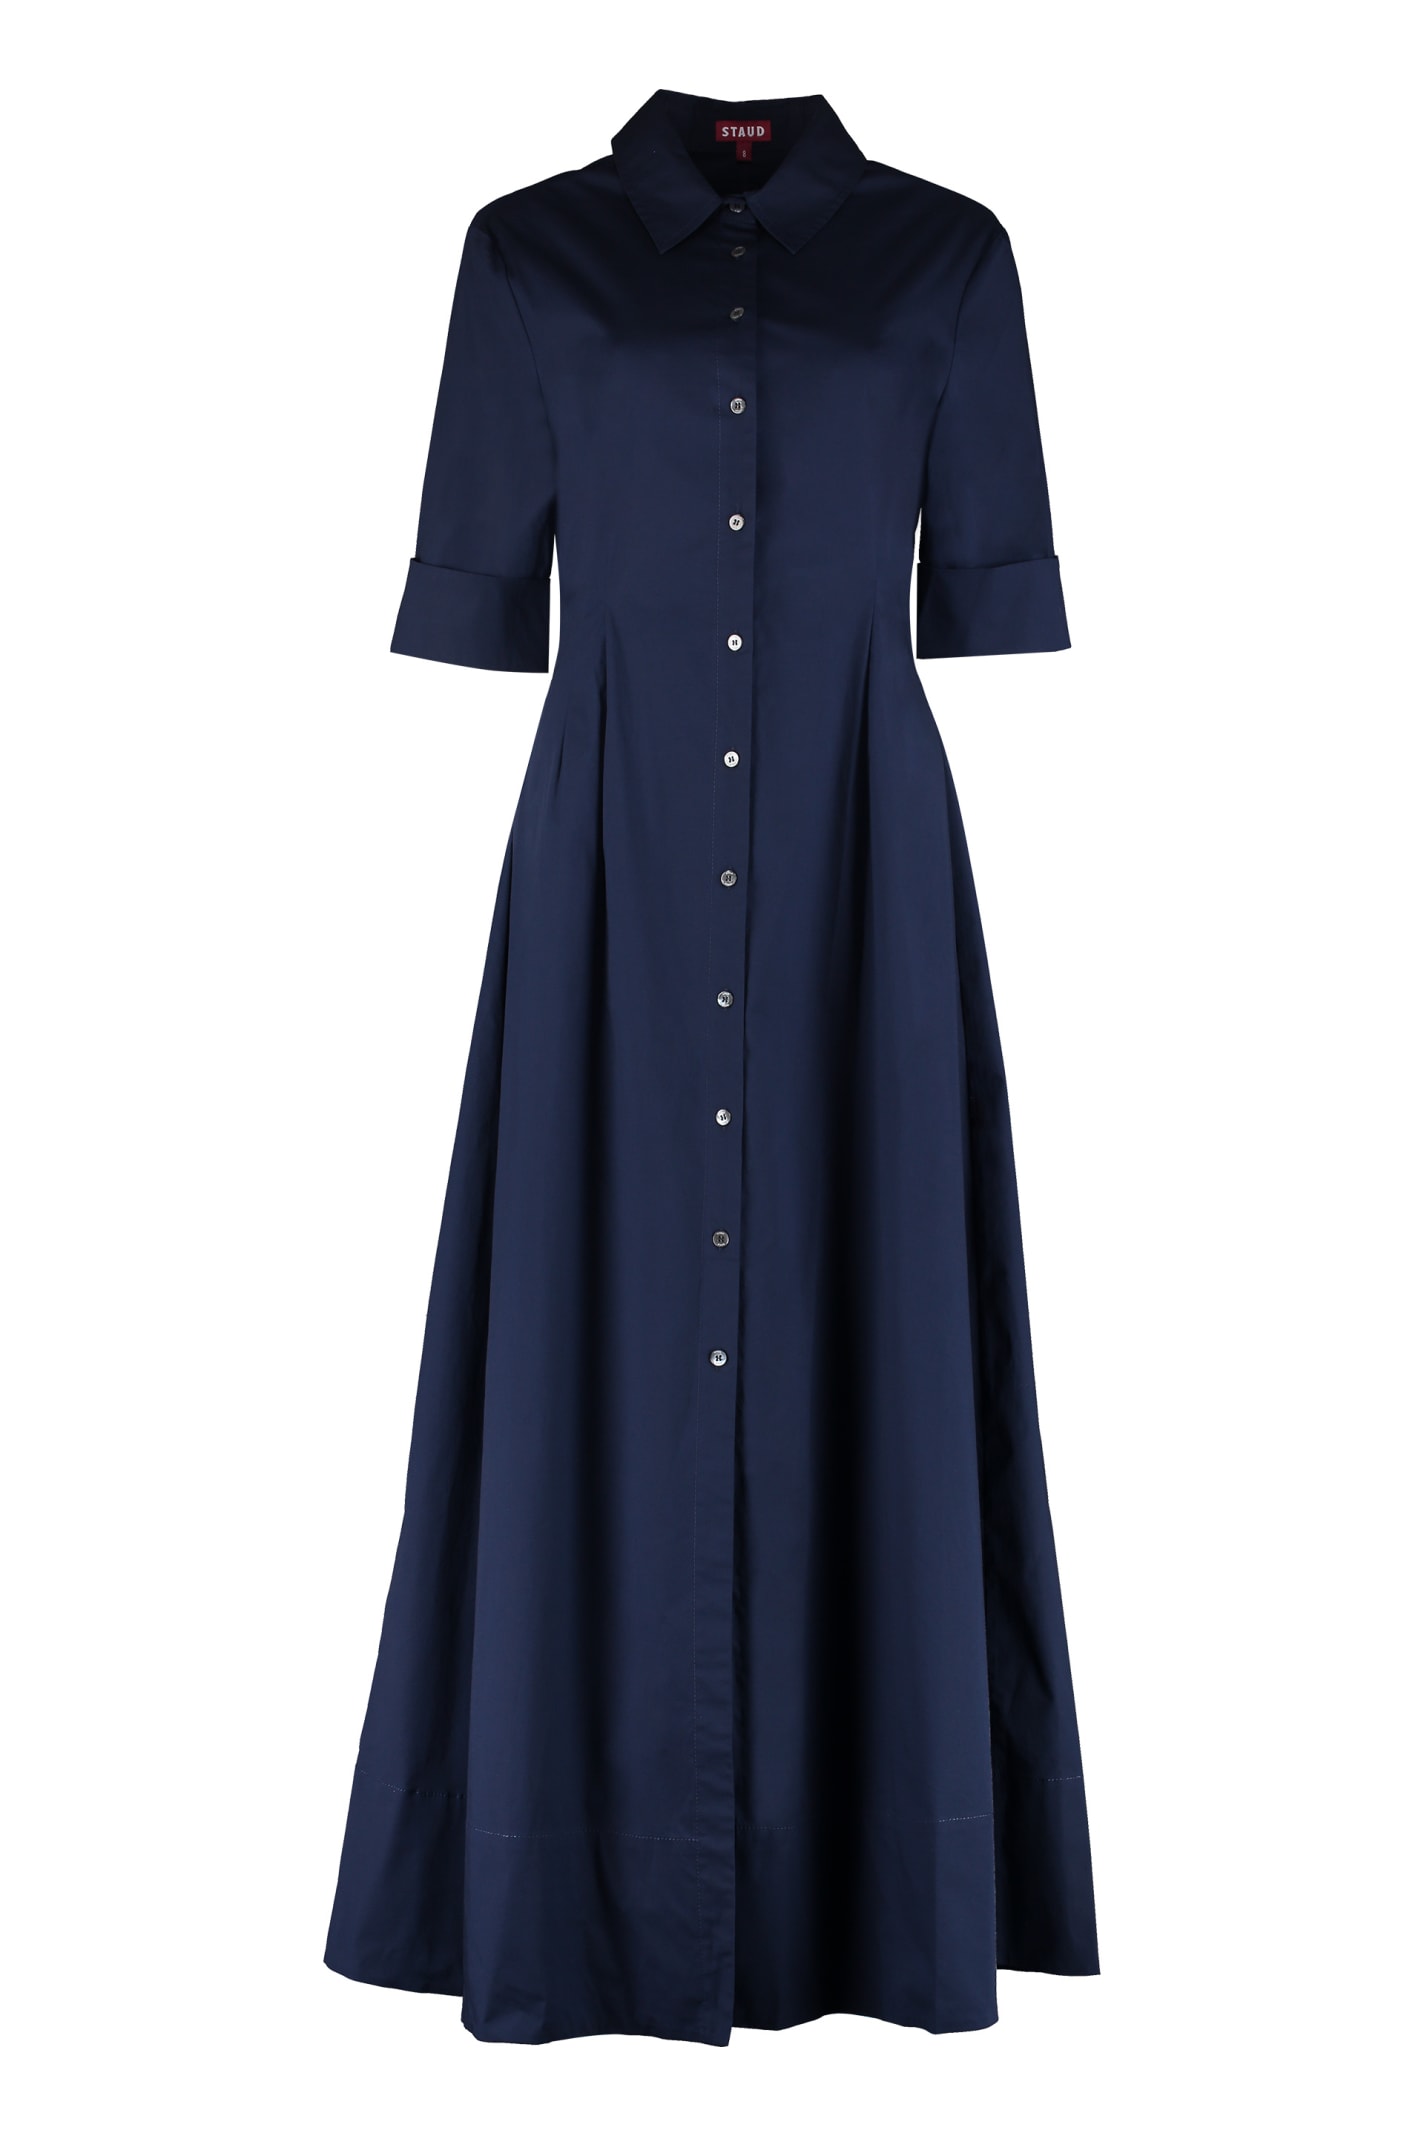 STAUD Joan Cotton Long Dress